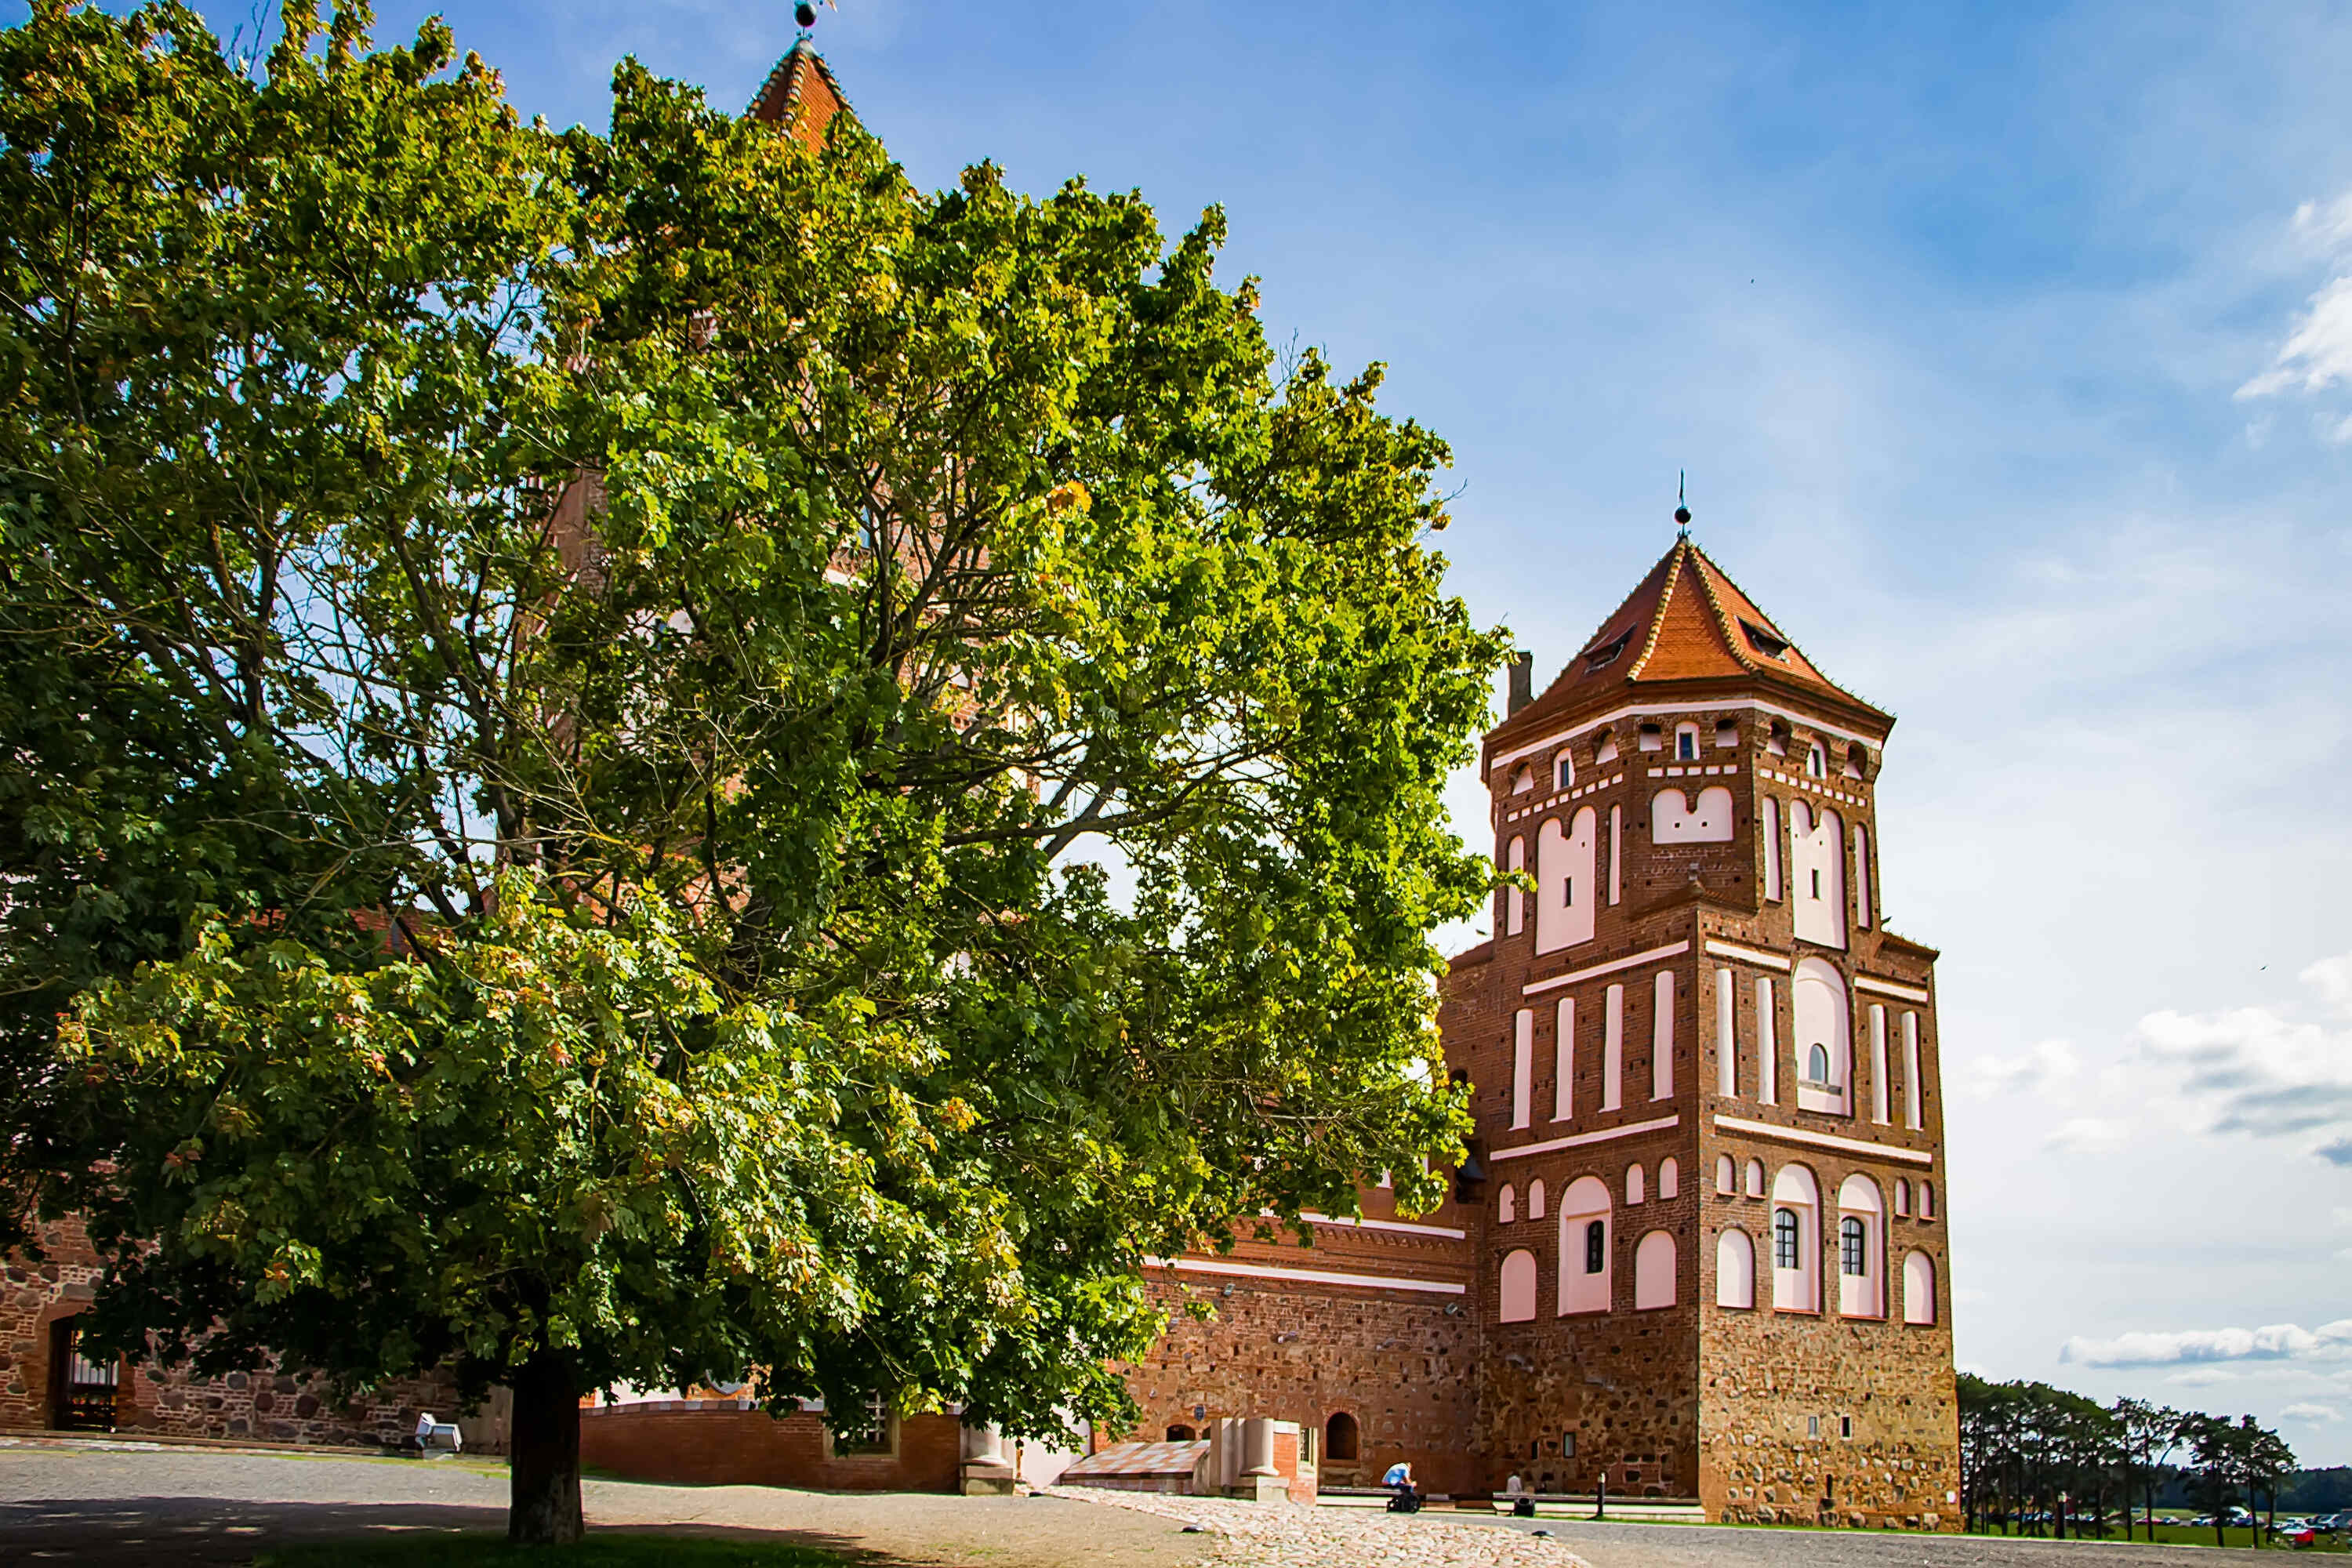 Mir belarus view of a medieval castle